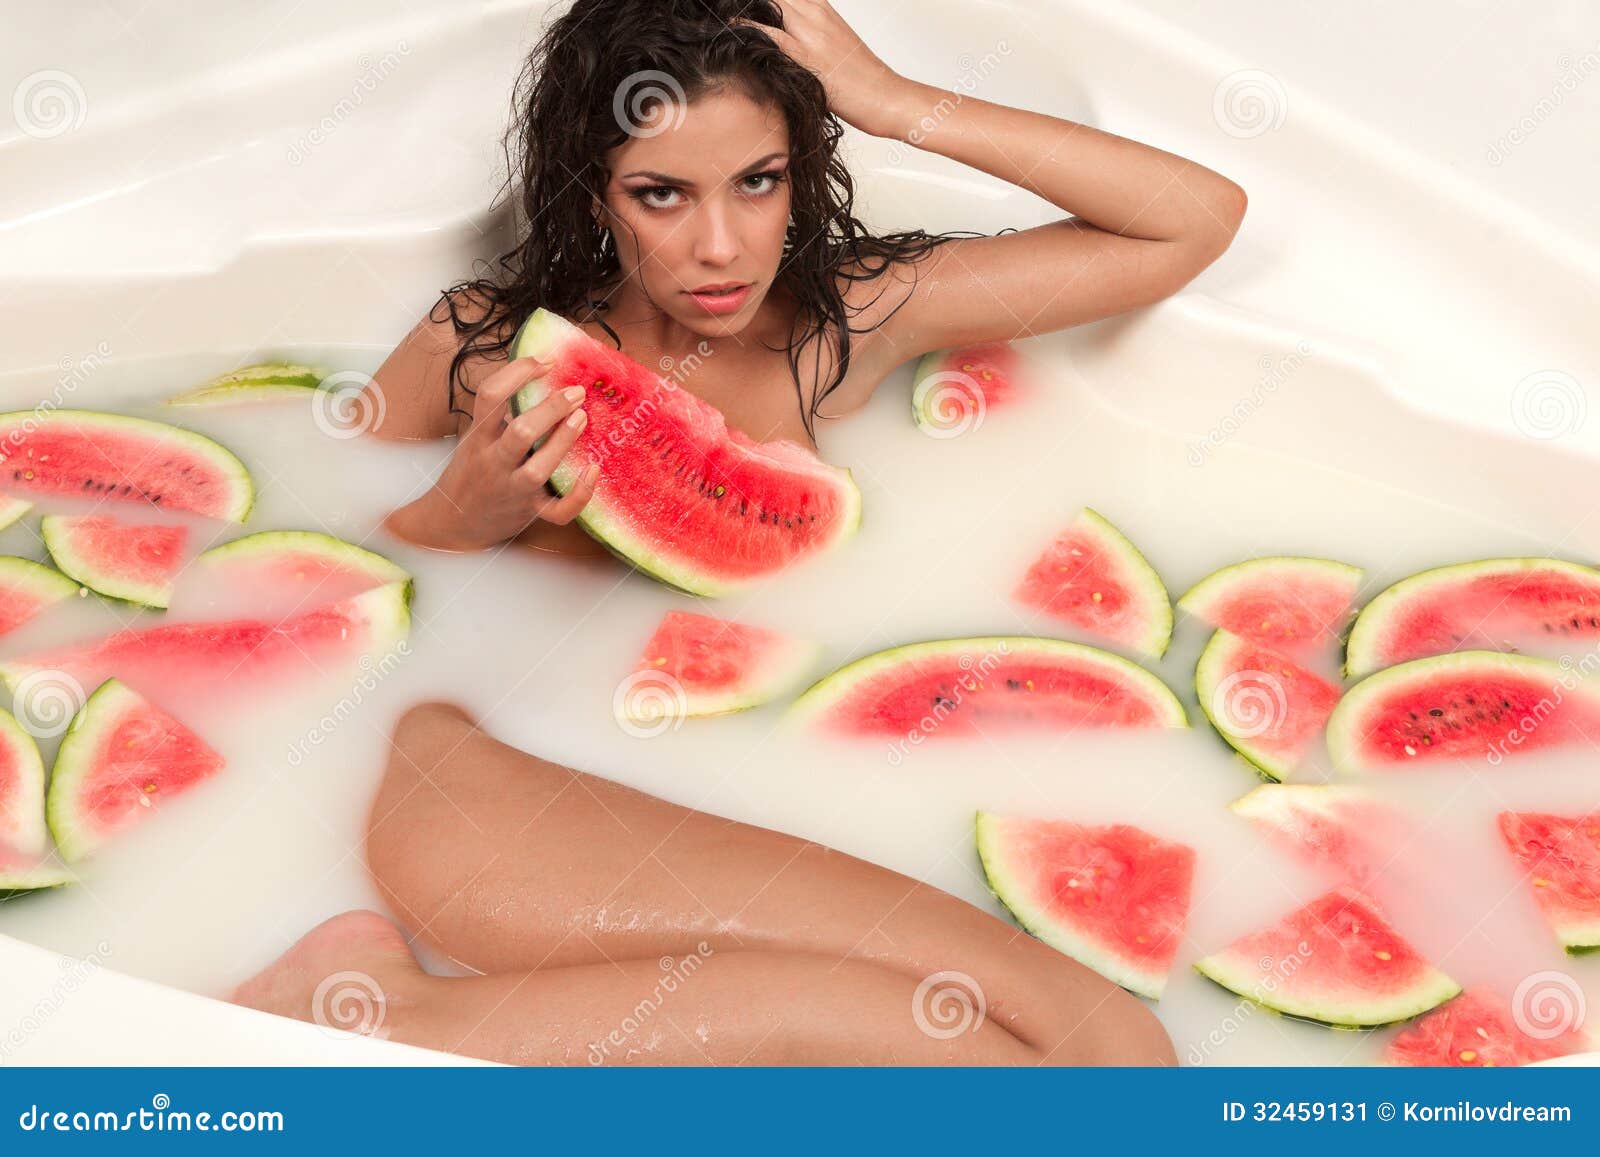 Girl Enjoys A Bath With Milk And Watermelon. Stock Photo 32459131 - Megapixl